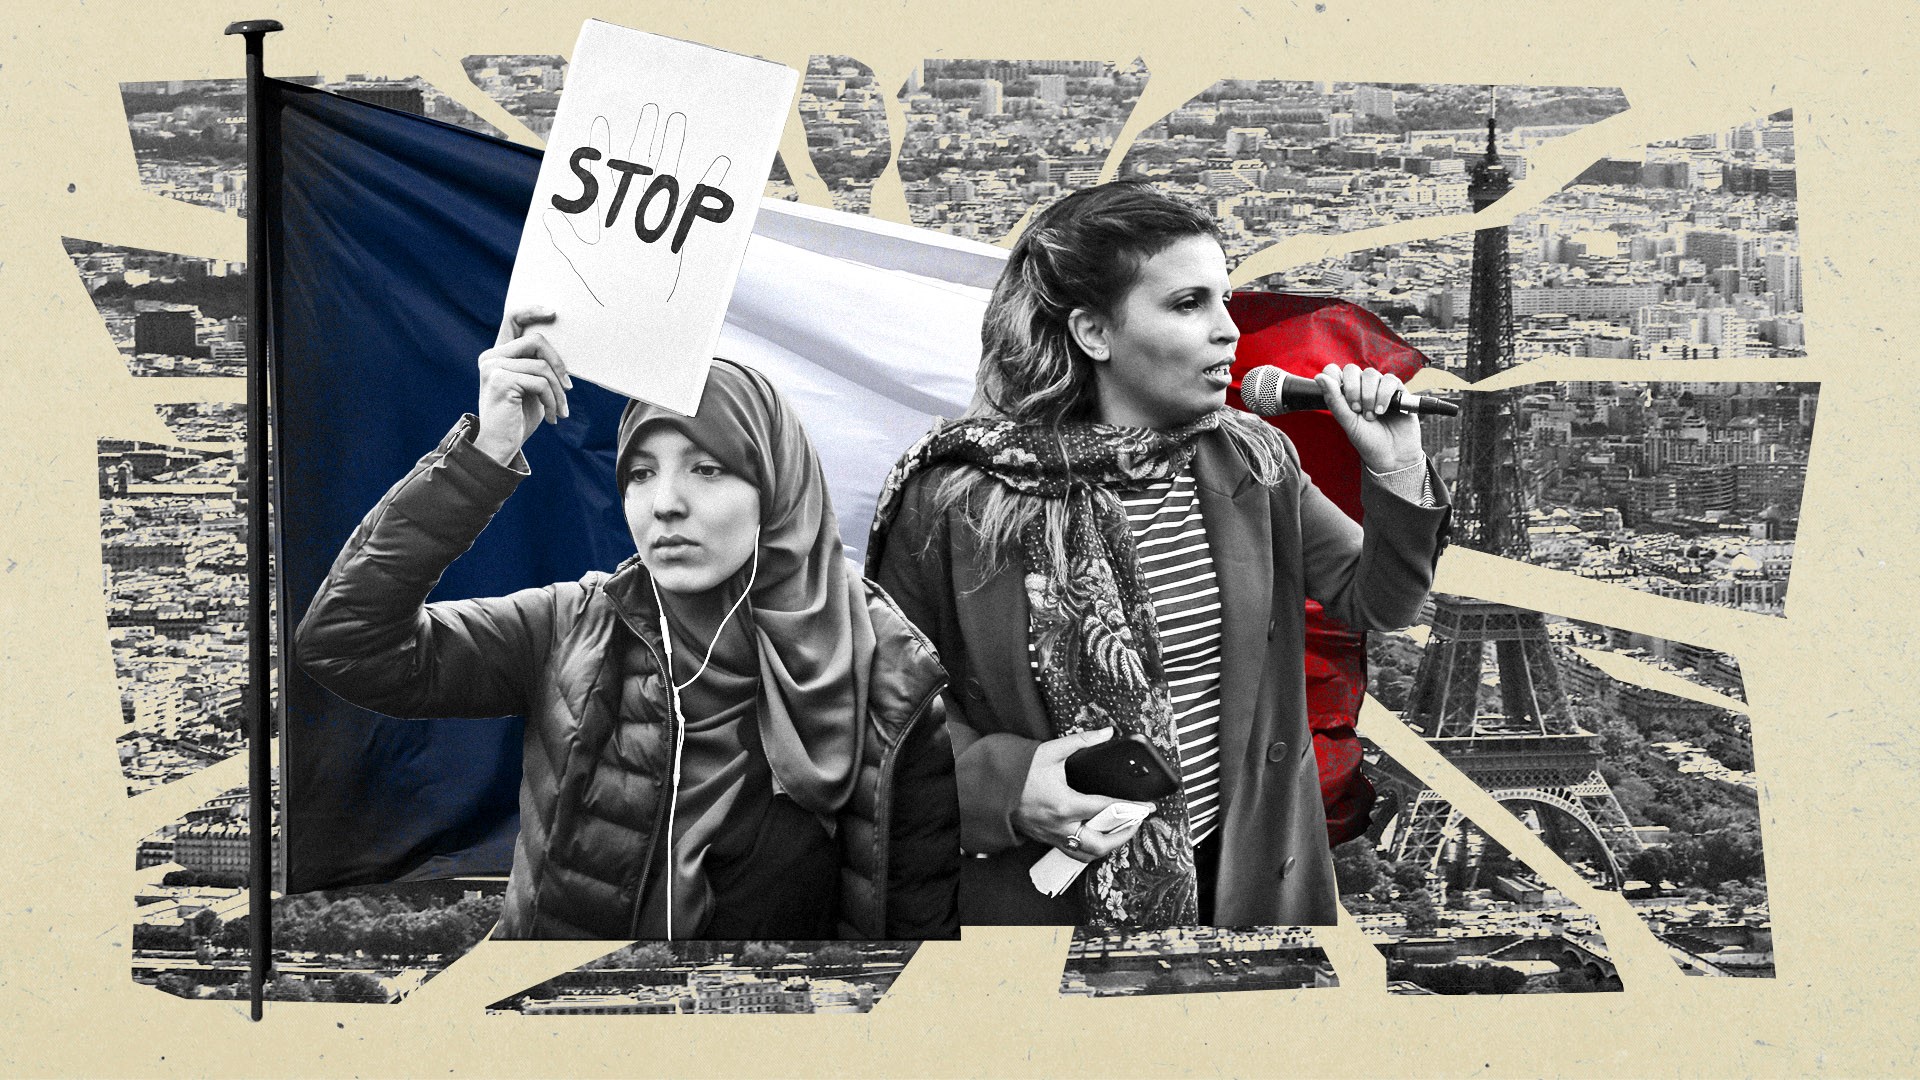 France - Muslim Women Lift the Veil on French Islamophobia